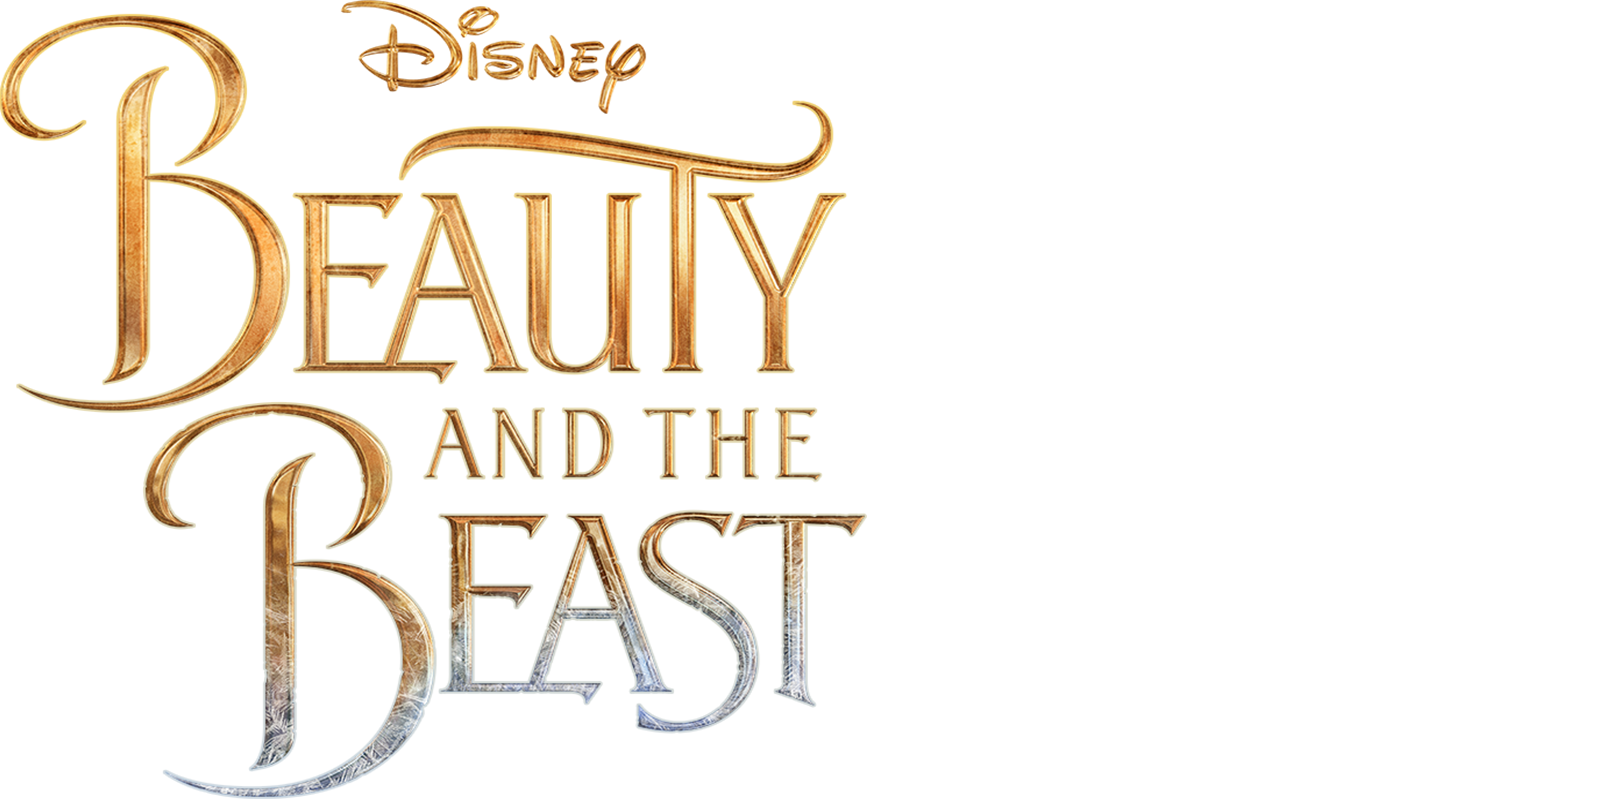 beauty and the beast 2017 full movie streaming putlocker